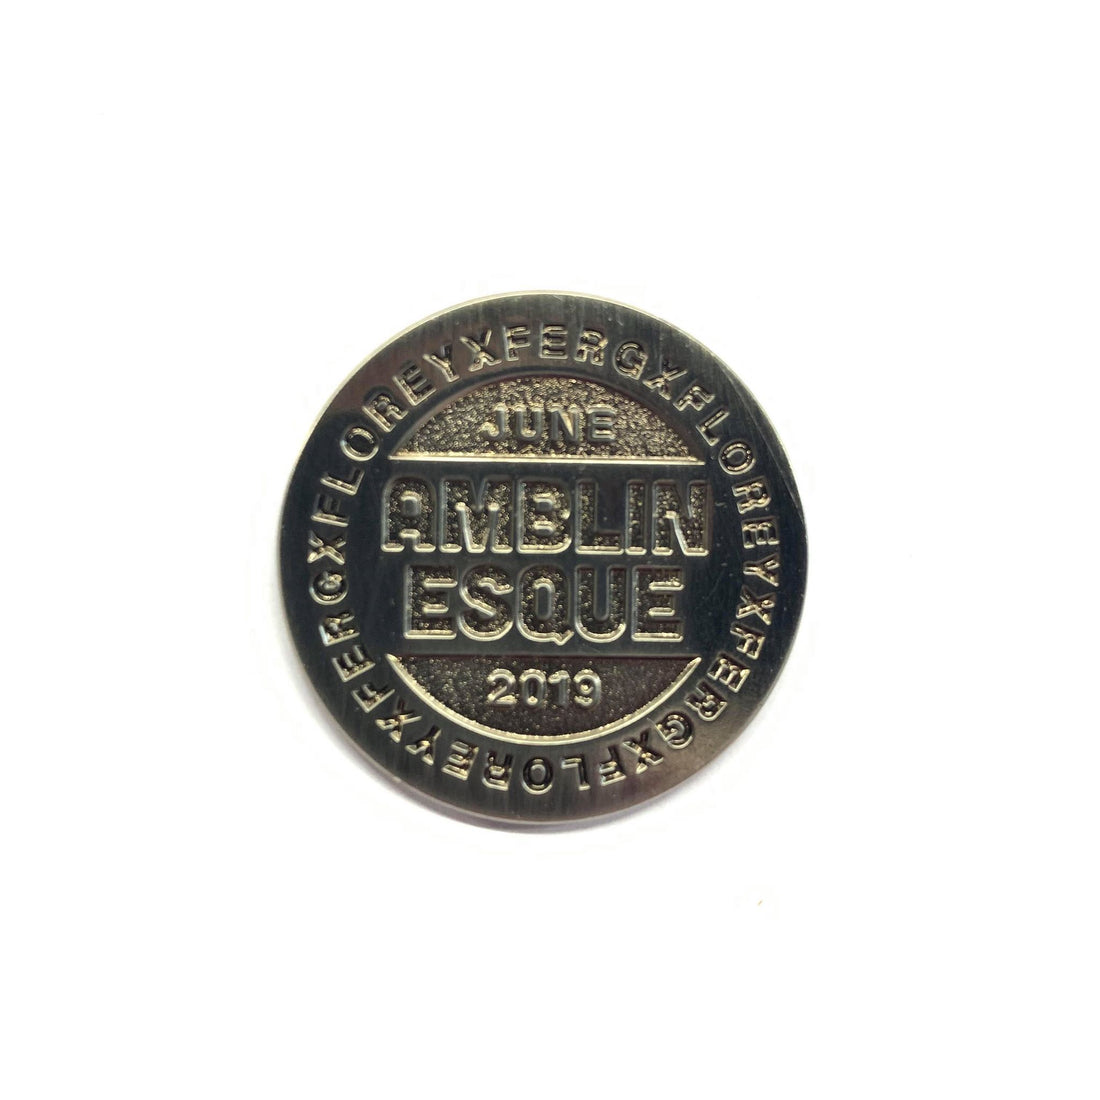 Amblinesque Crest Enamel Pin